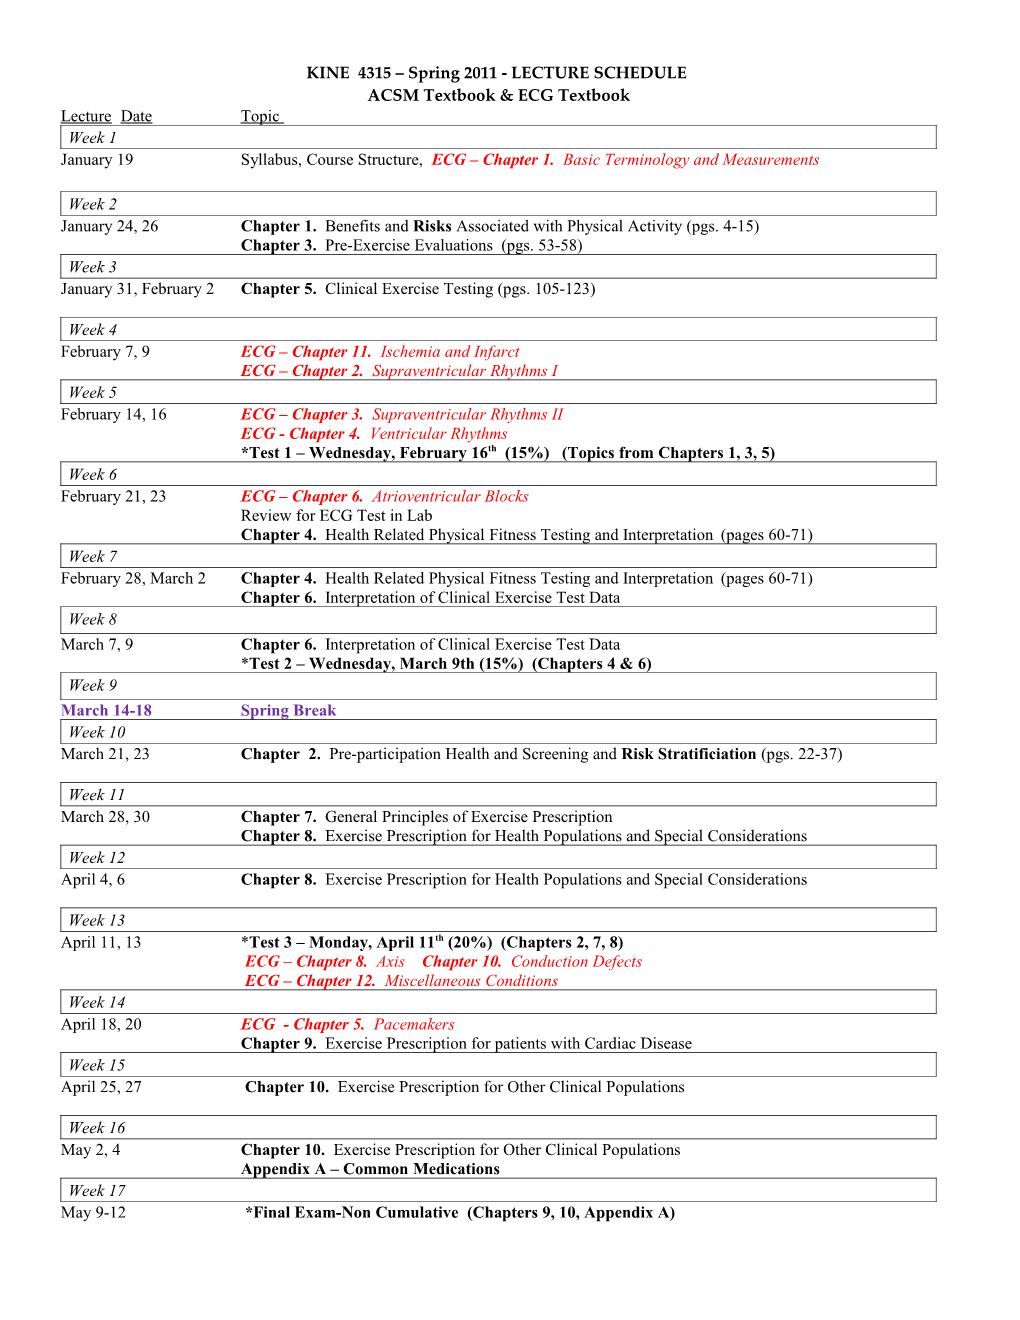 TENTATIVE EXS 460 Lecture Schedule